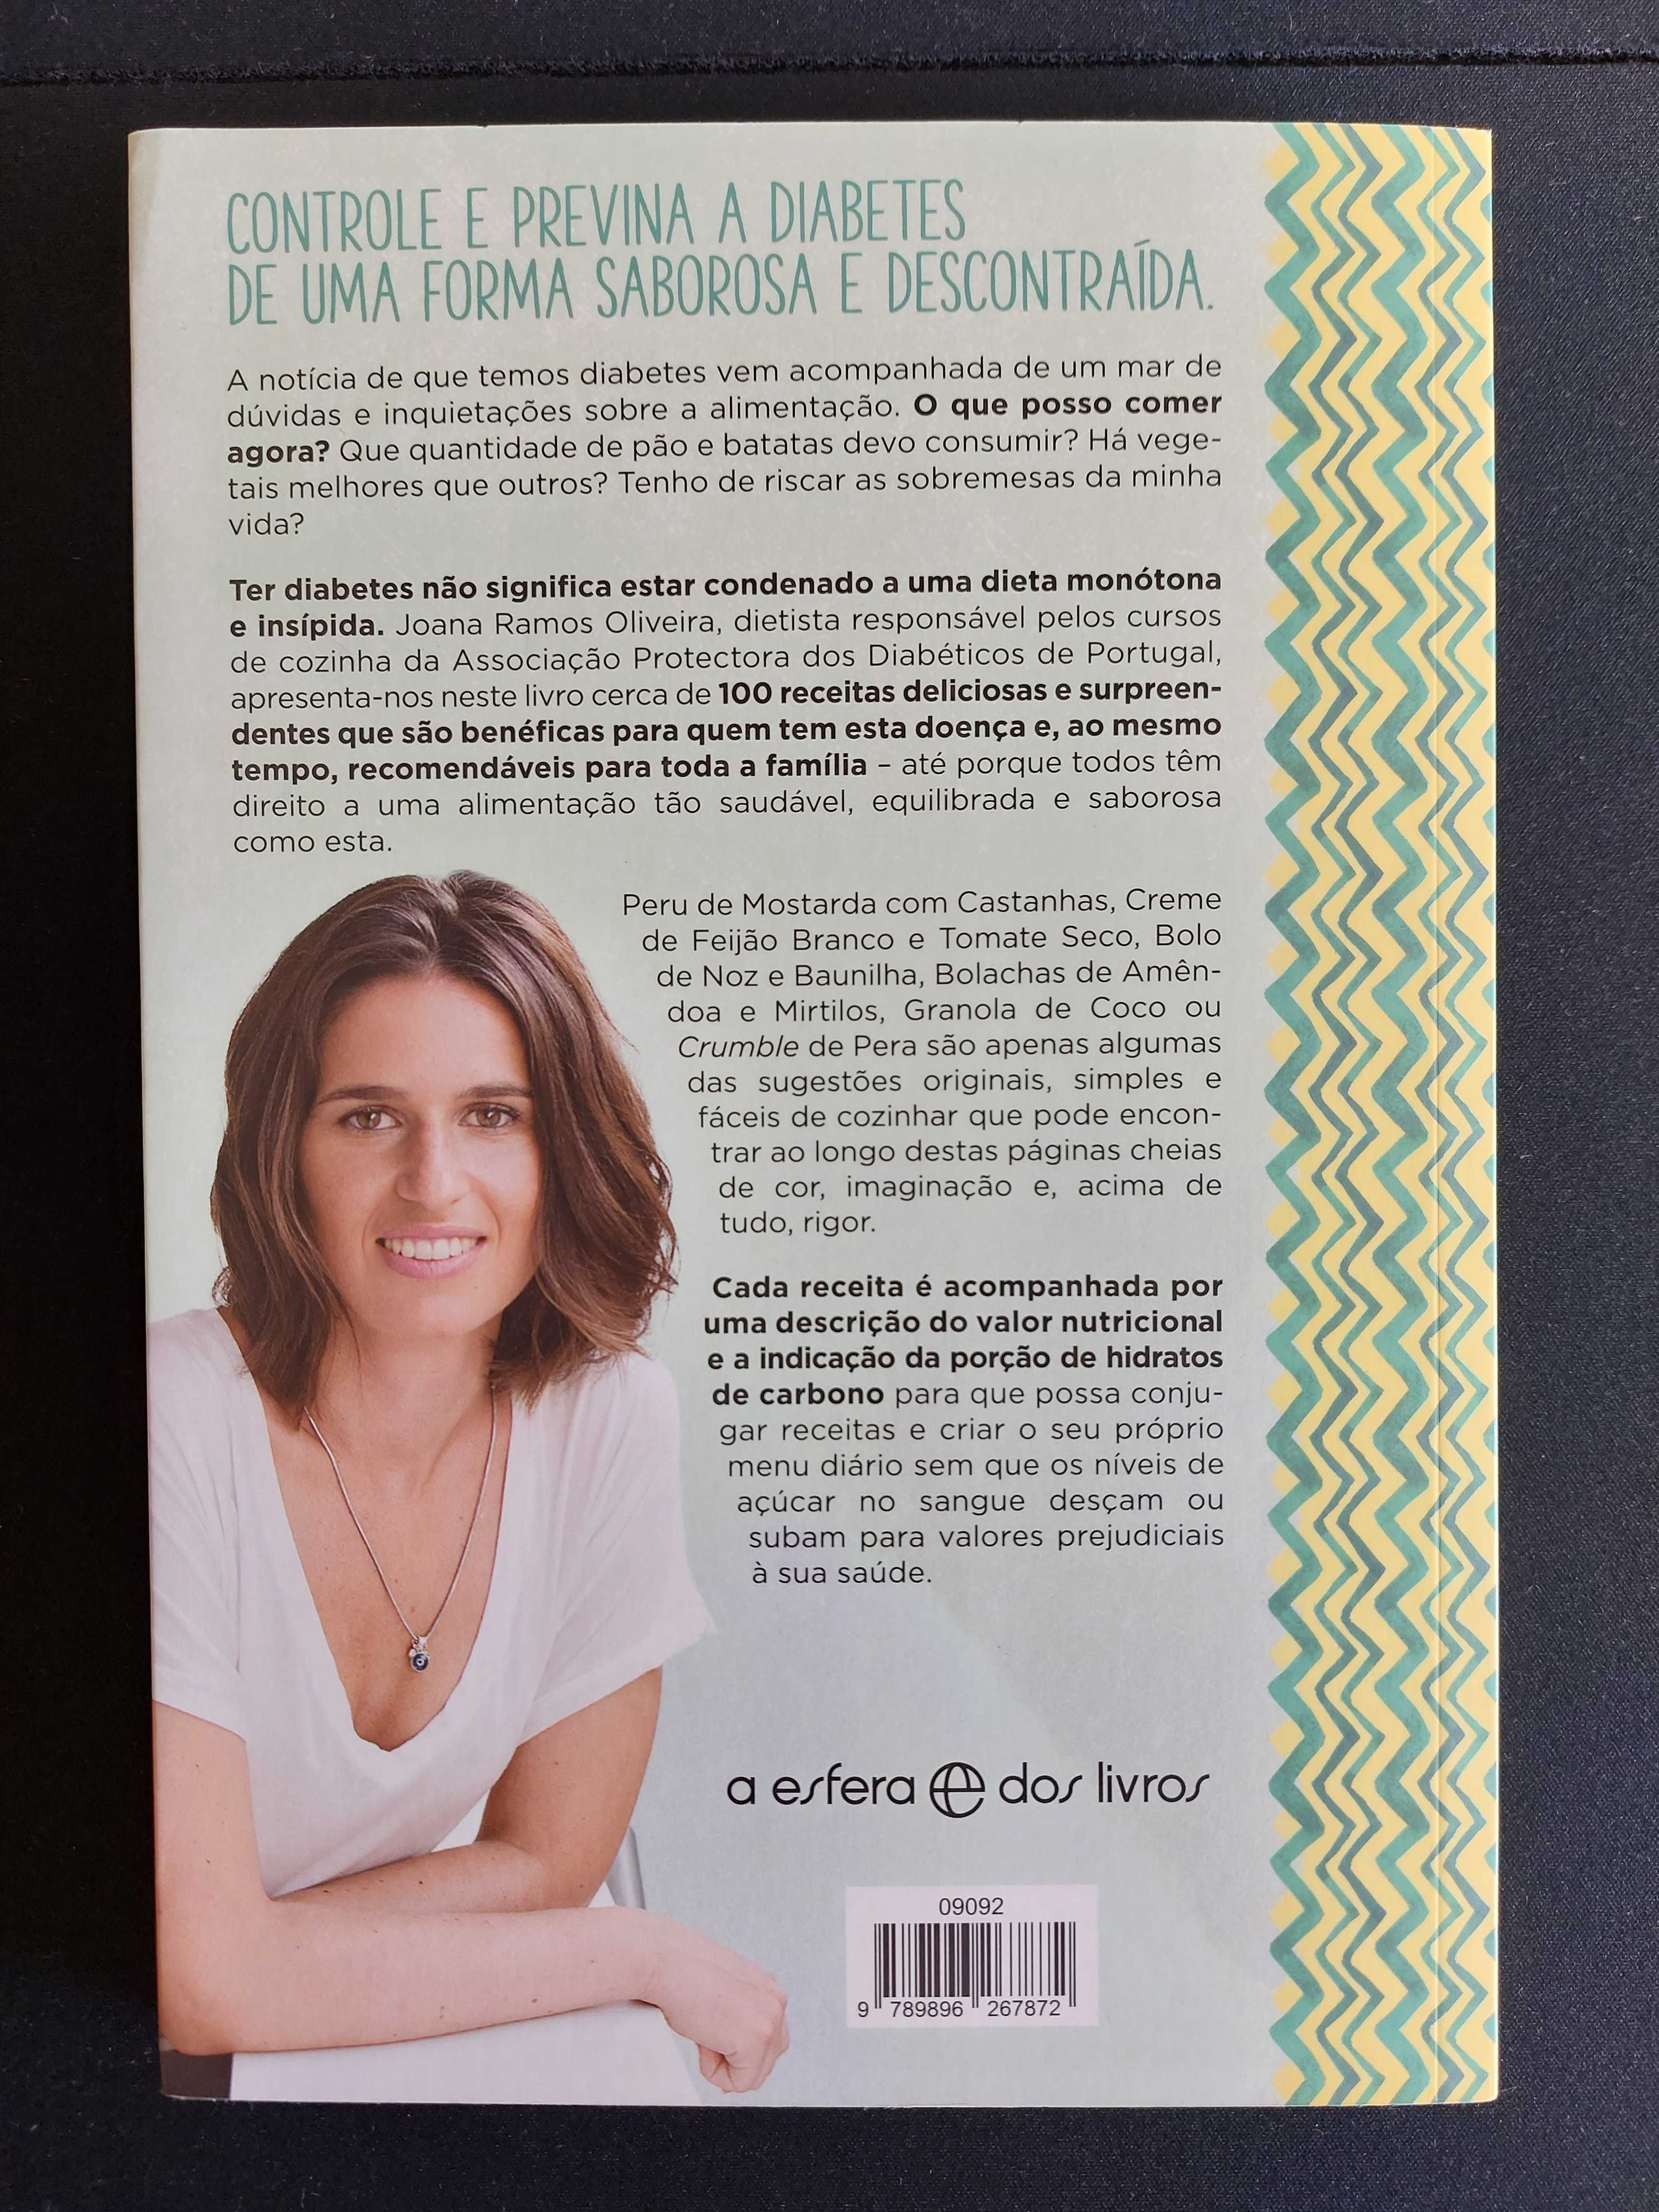 Livro "Comer Para Controlar a Diabetes" - Joana Ramos Oliveira